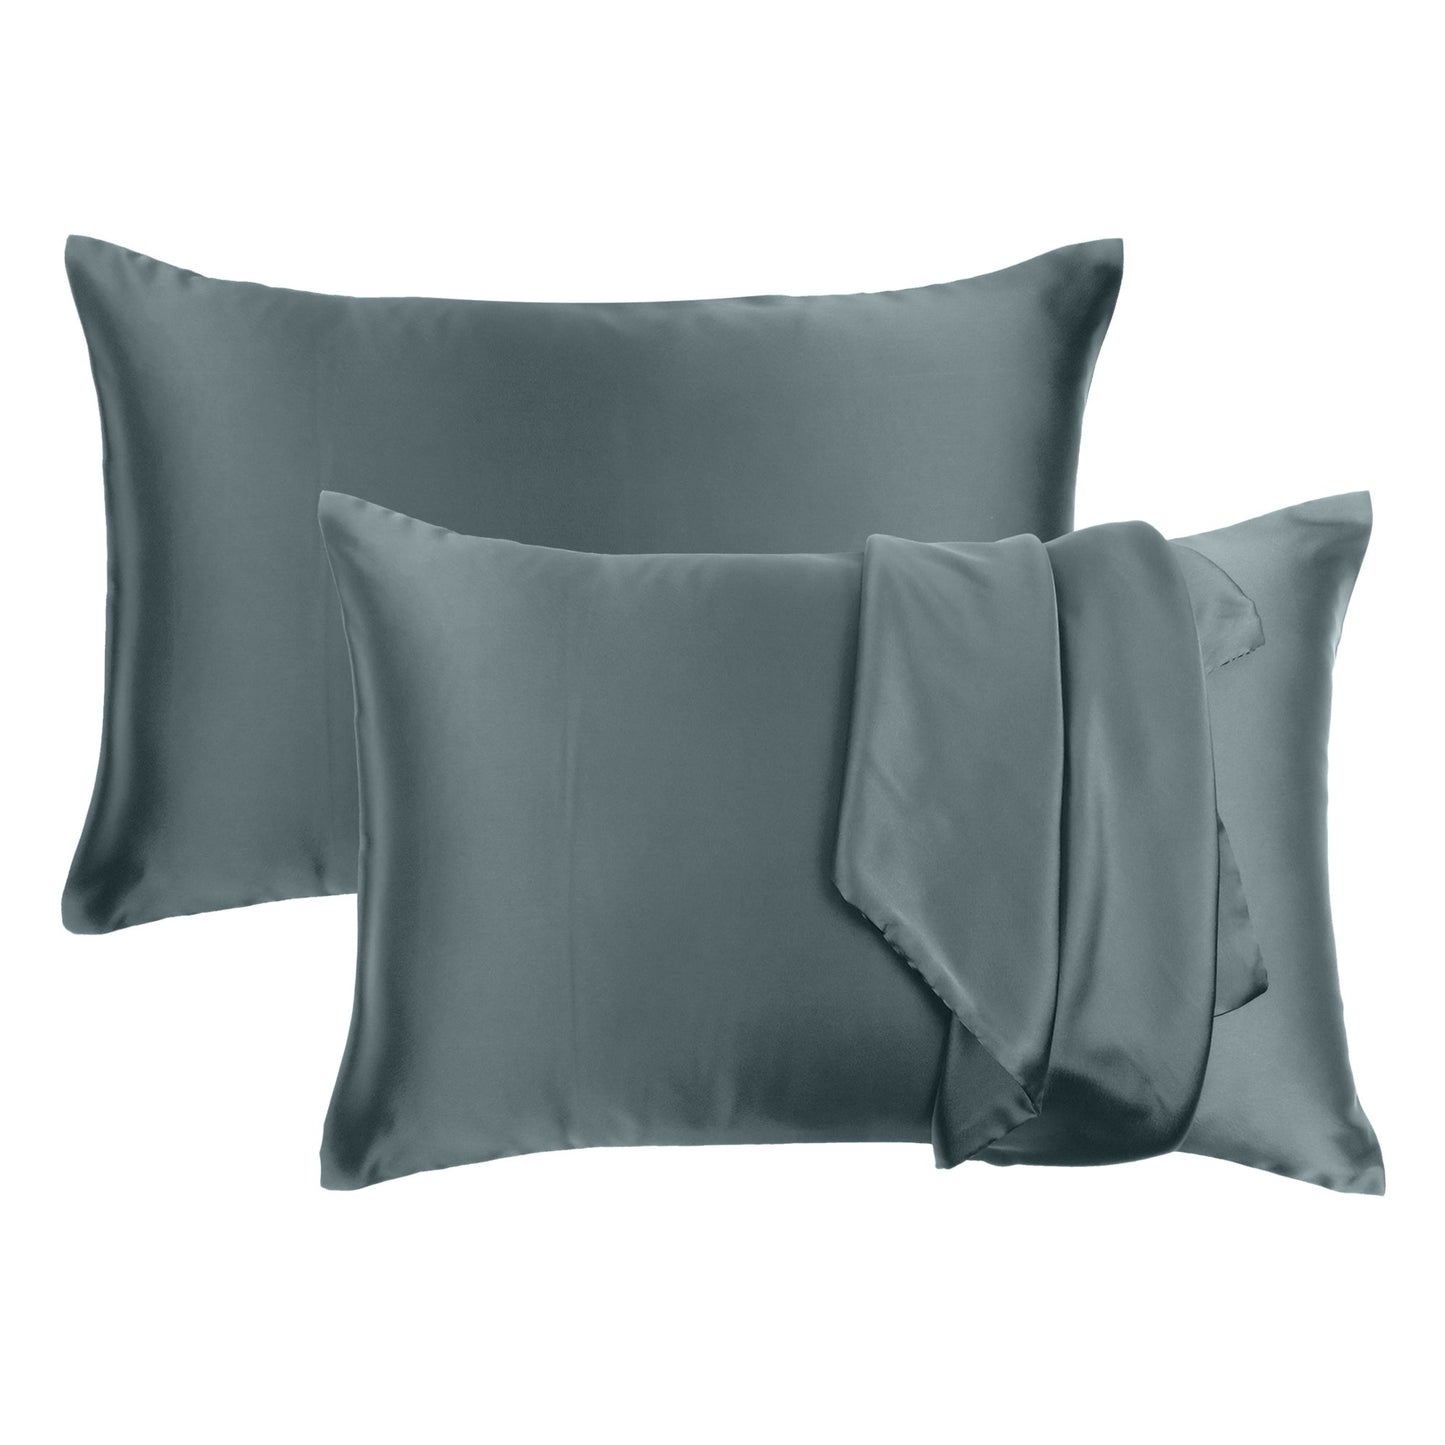 Luxury Soft Plain Satin Silk Pillowcases in Set of 2 - Steel Gray